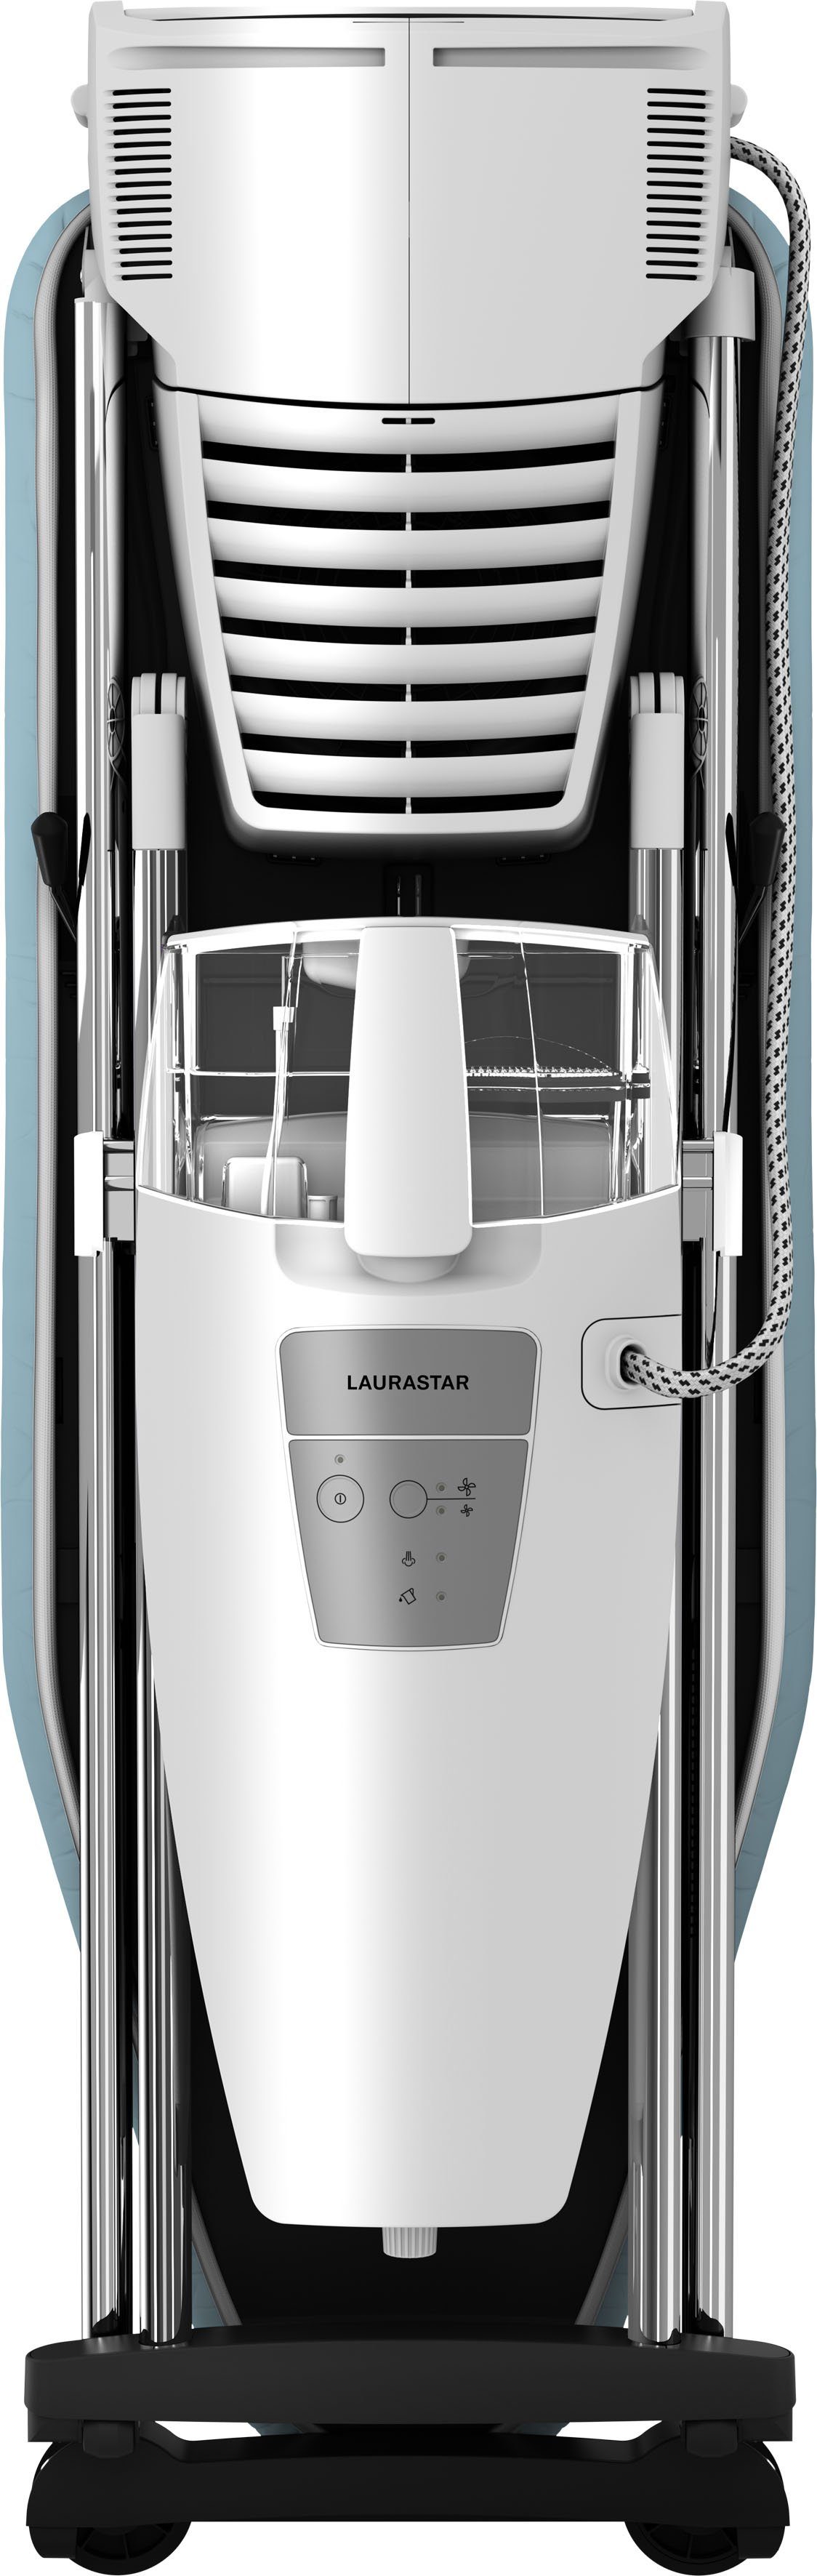 S + LAURASTAR Xtremecover, Bügelsystem W 2200 Pure